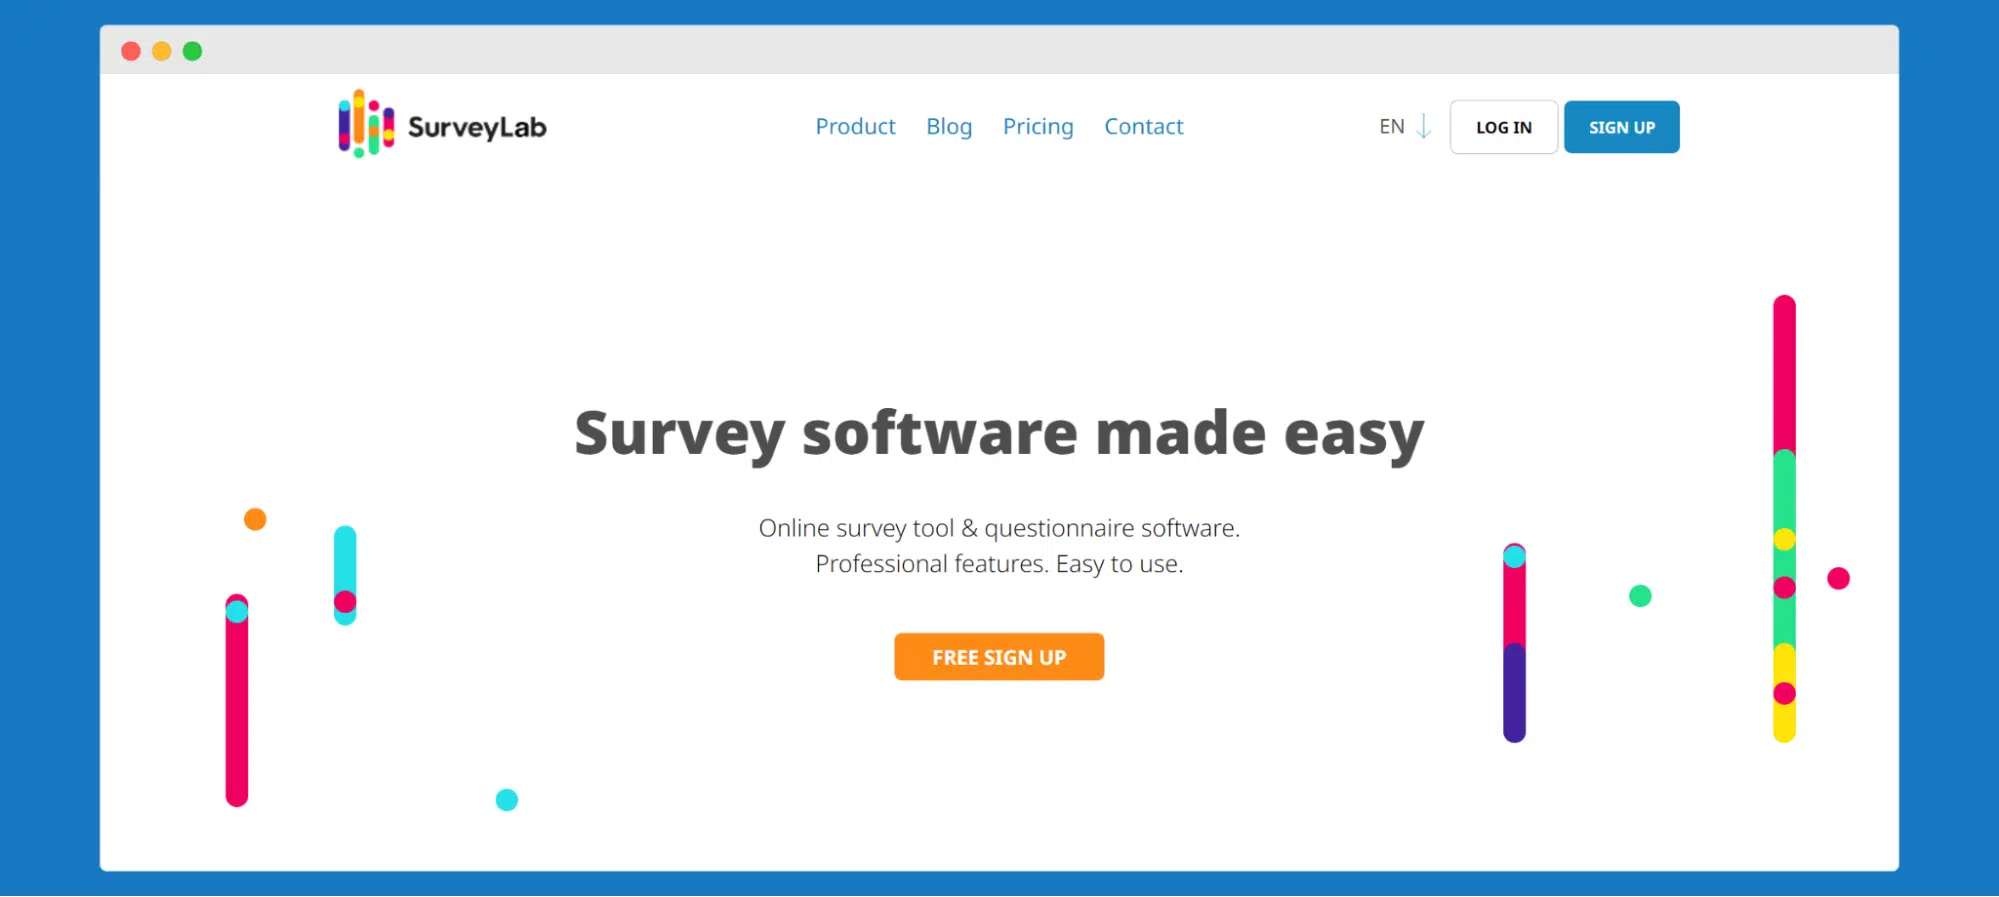 Surveylab's website